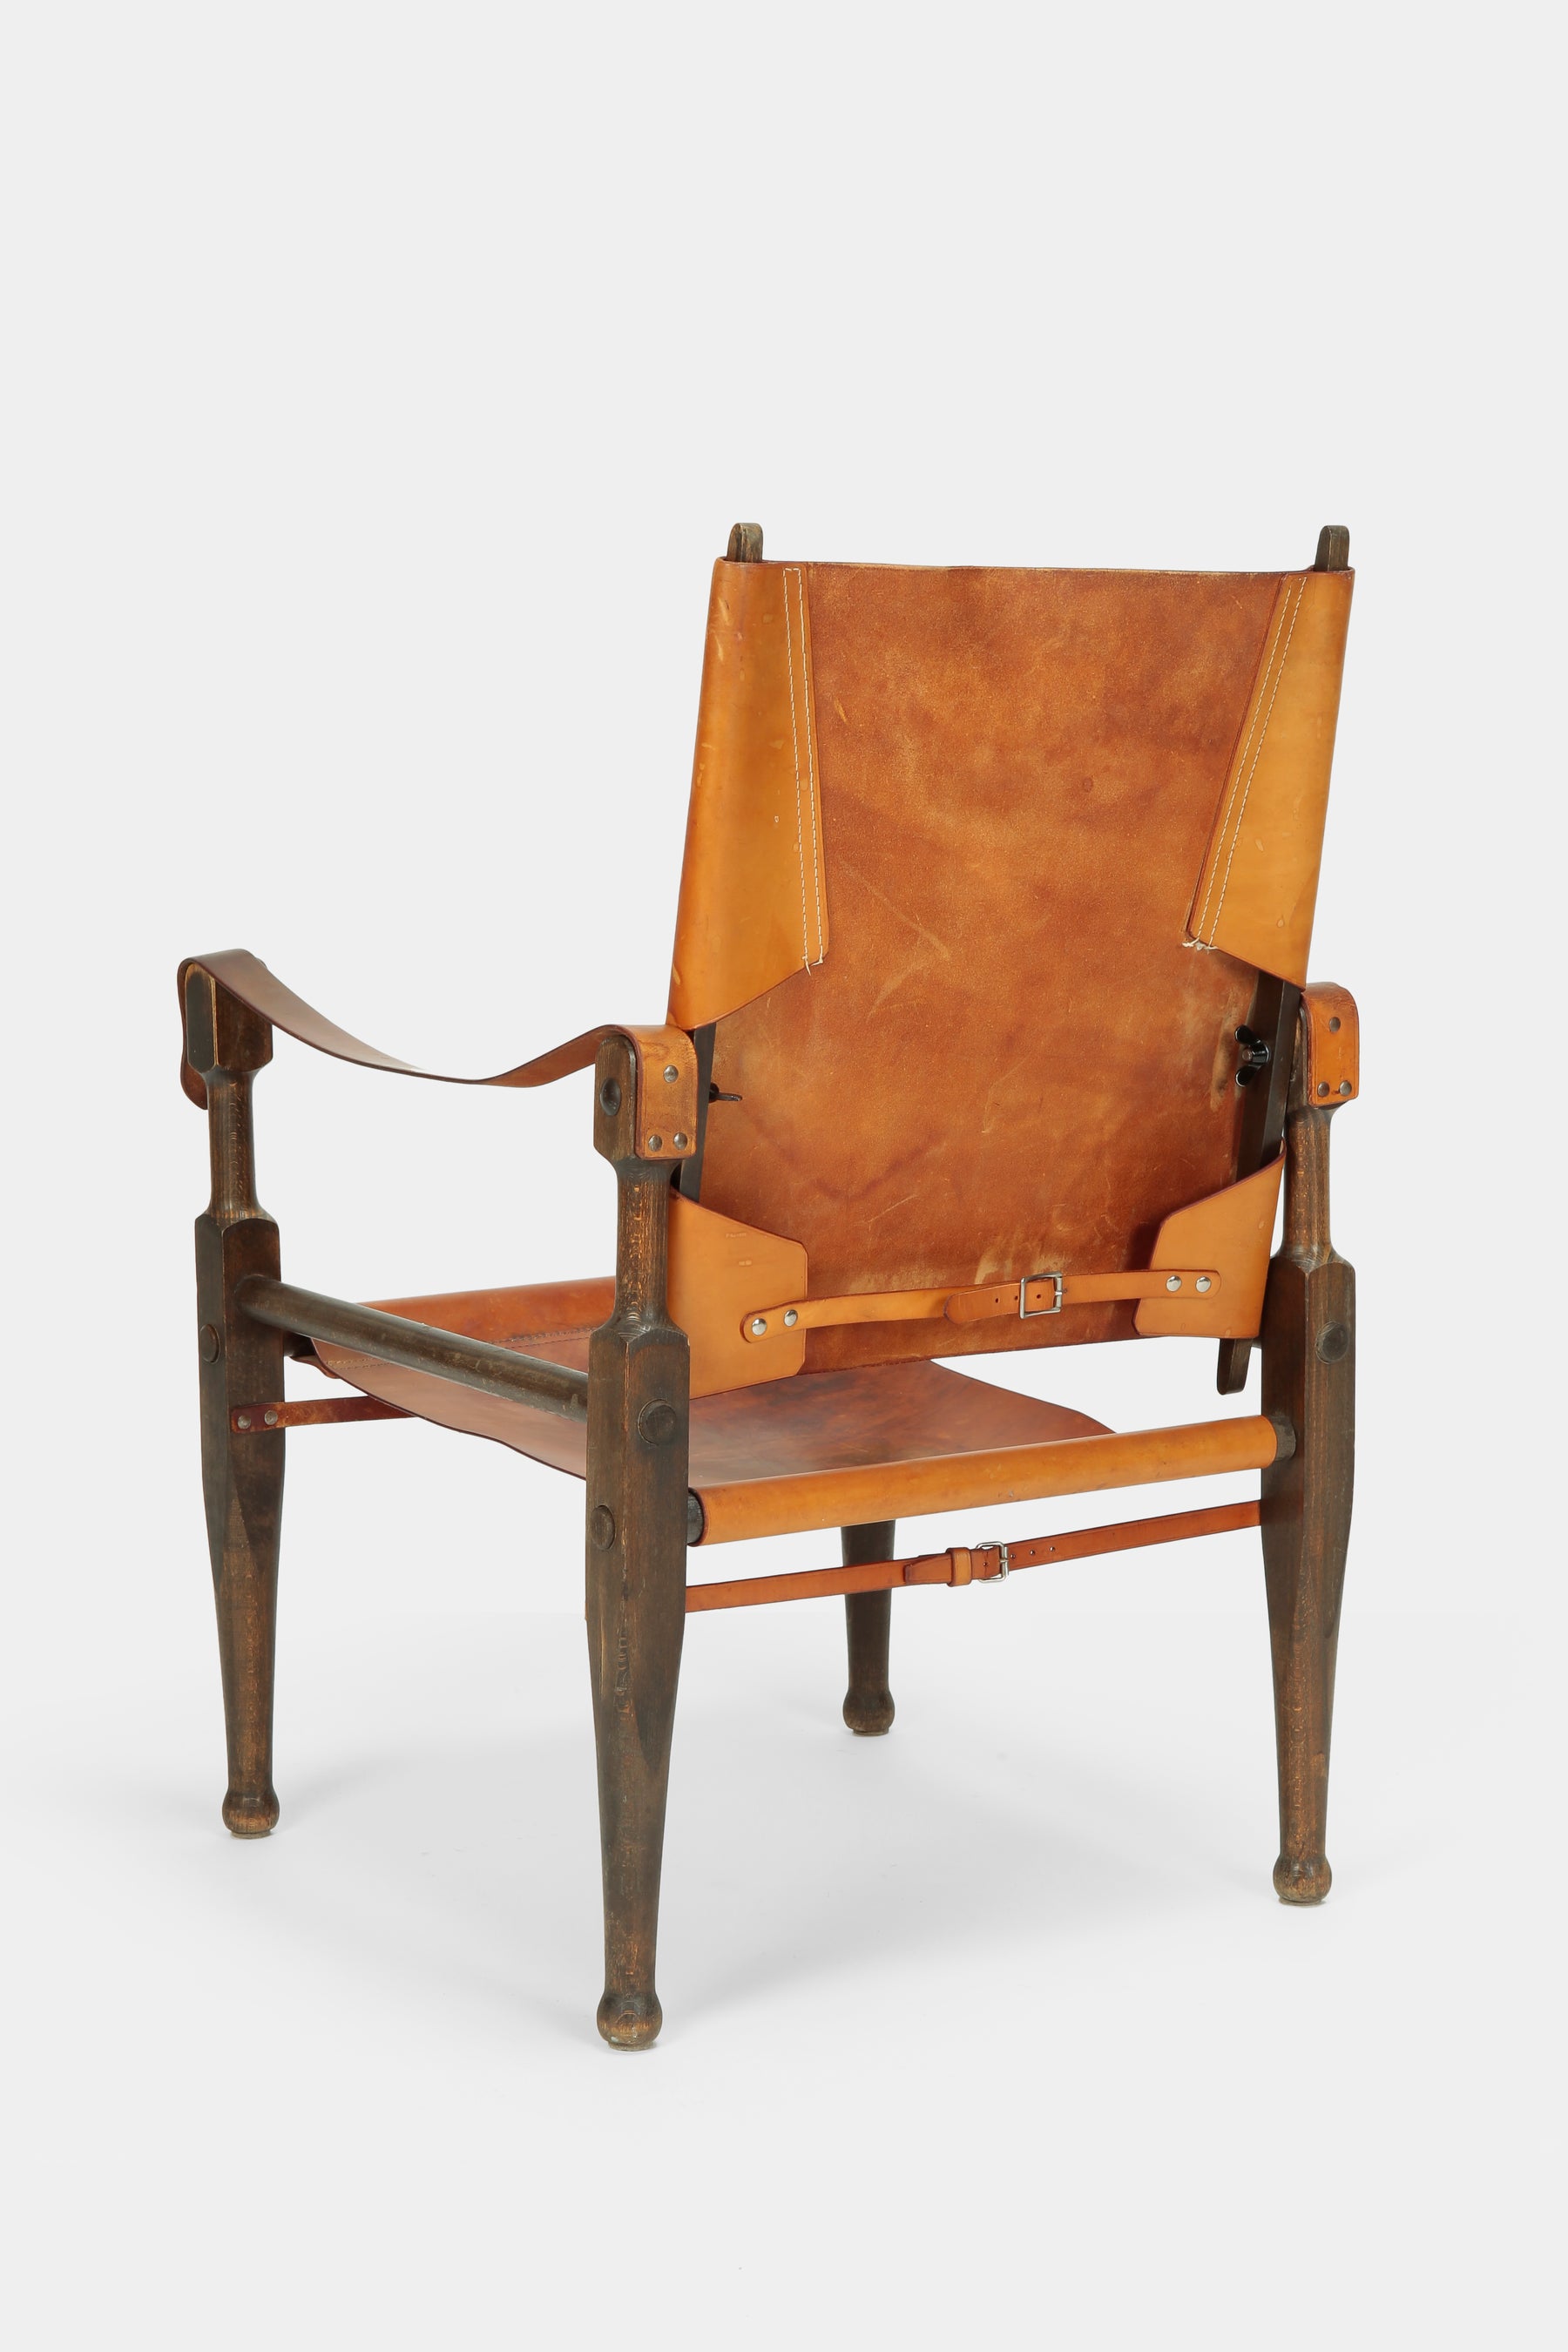 Pair of Wilhelm Kienzle Safari Chair, Wohnbedarf, 50s